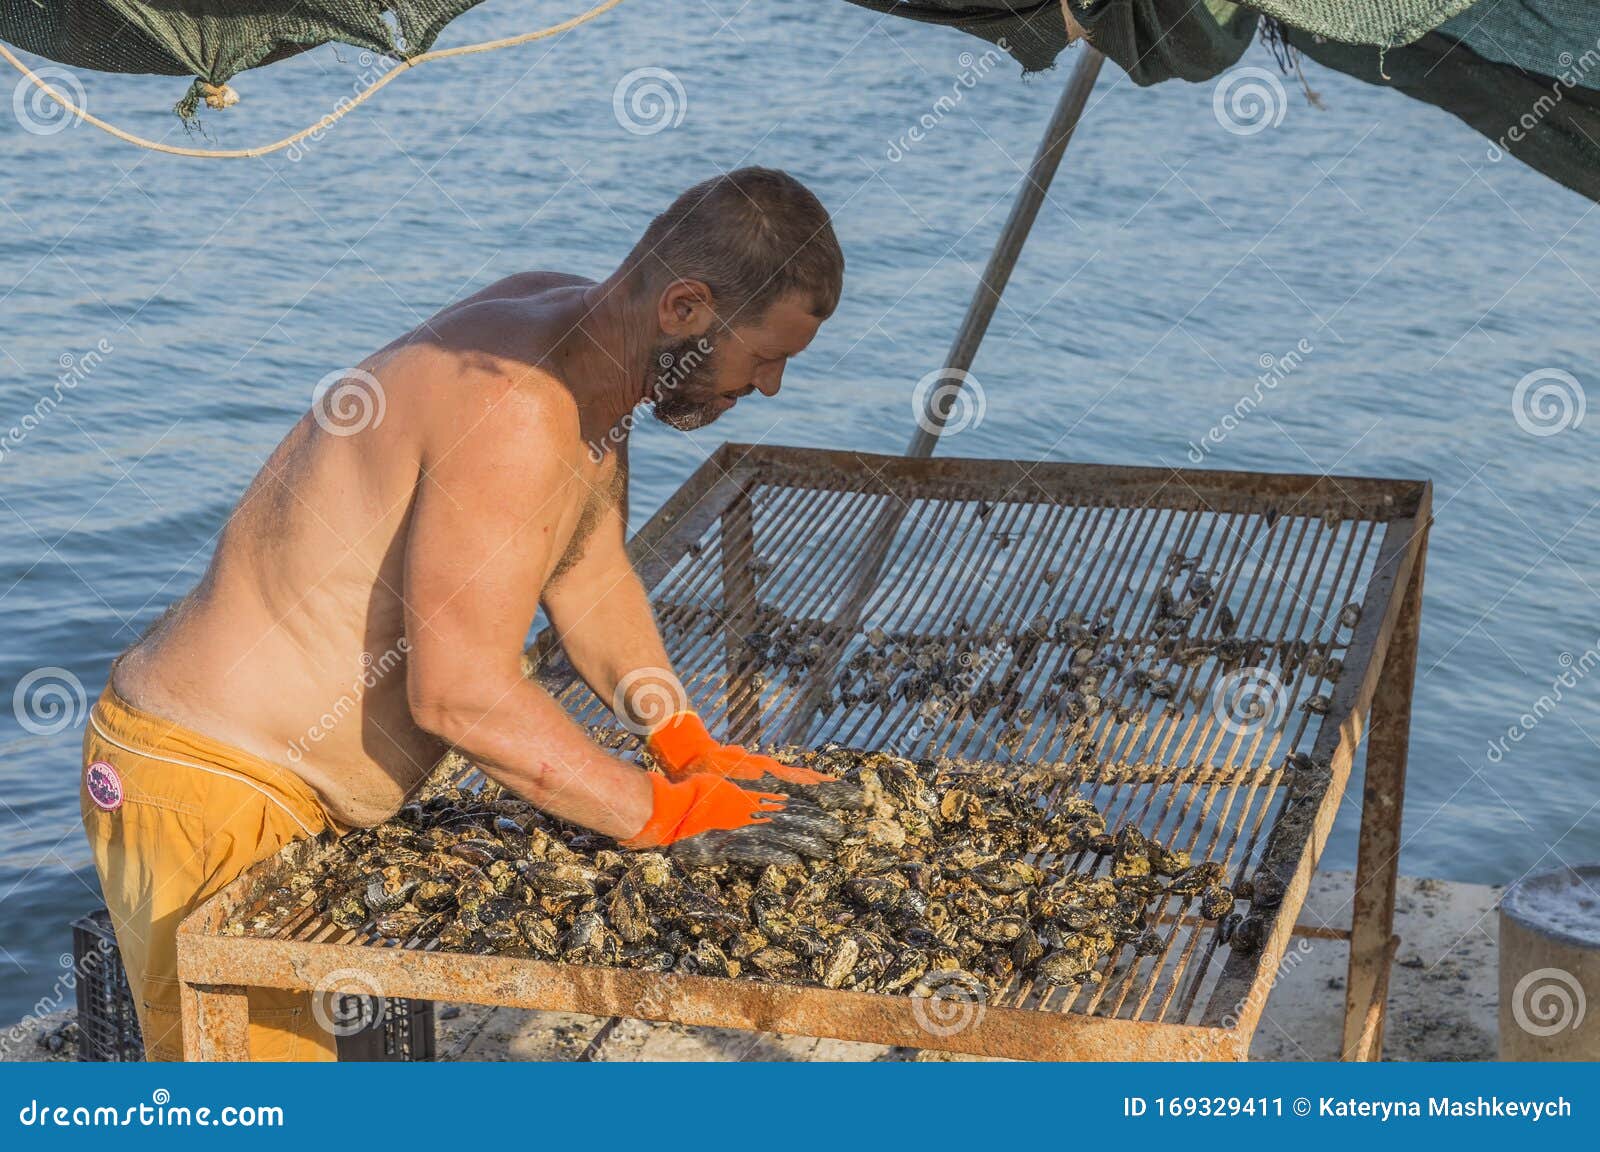 saranda-albania-september-man-peels-mussels-primitive-boat-raft-mussel-farm-fresh-ecological-seafood-%D1%80oor-169329411.jpg